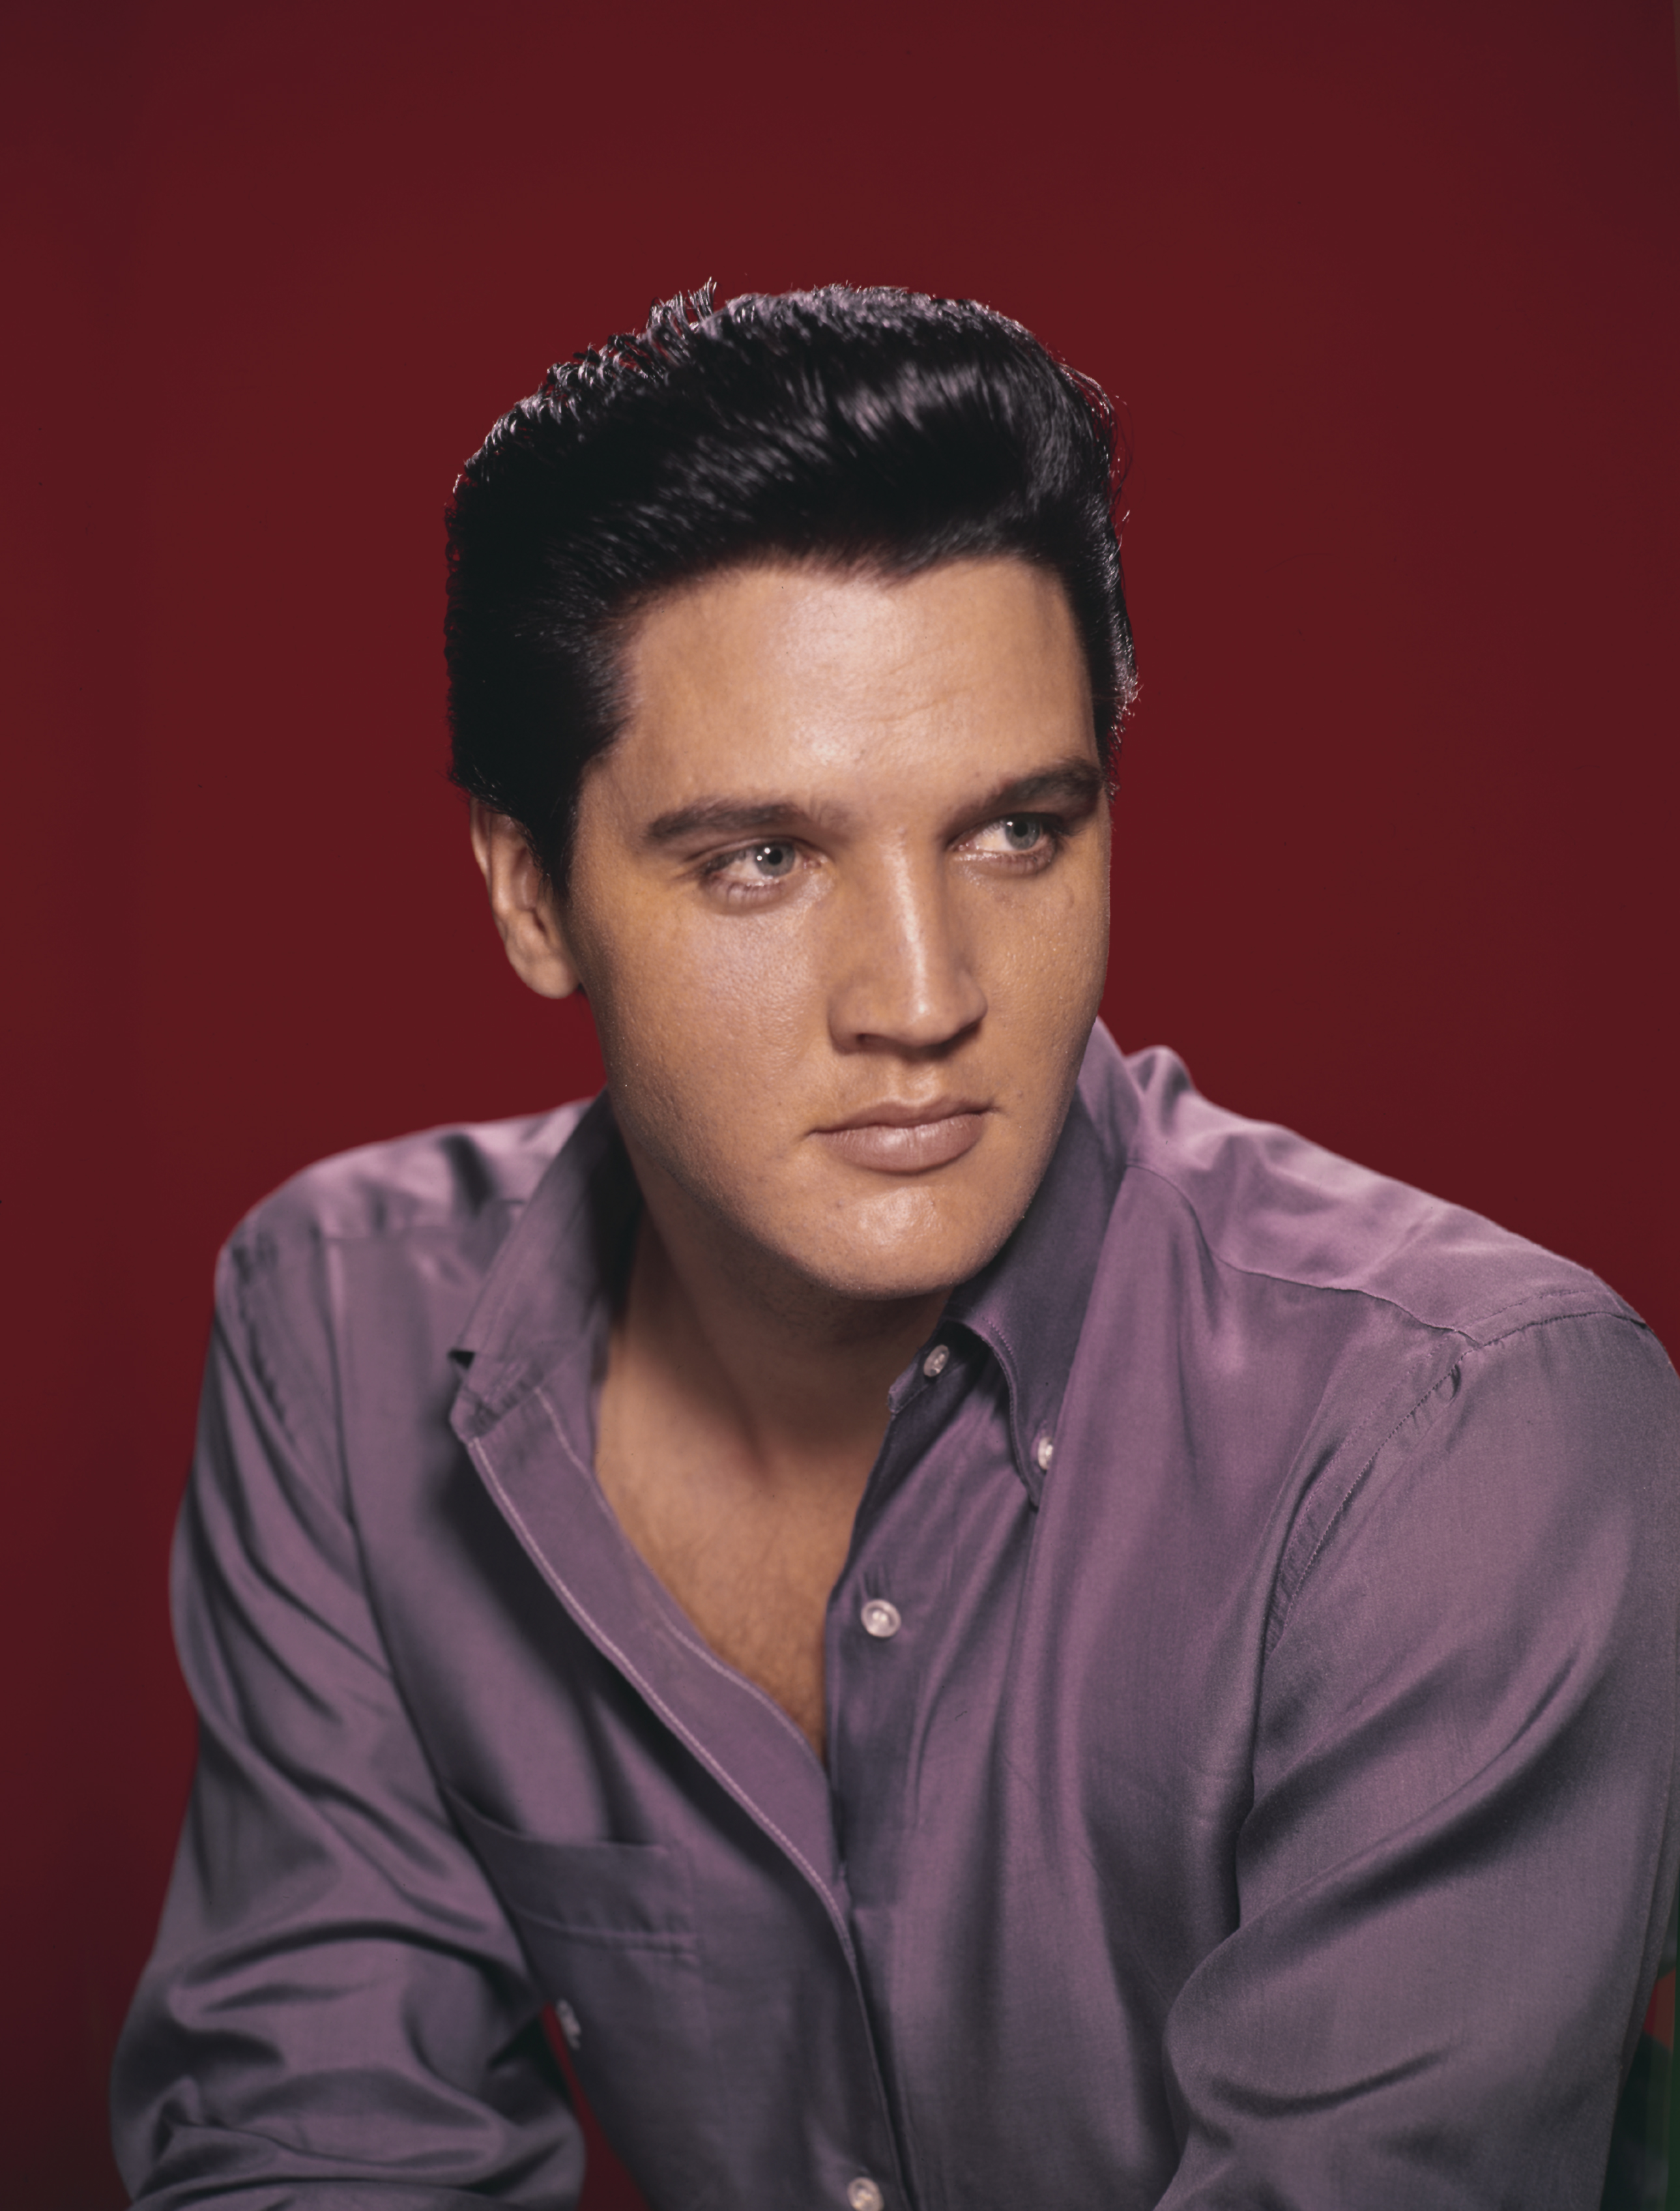 Elvis Presley circa 1956 | Source: Getty Images